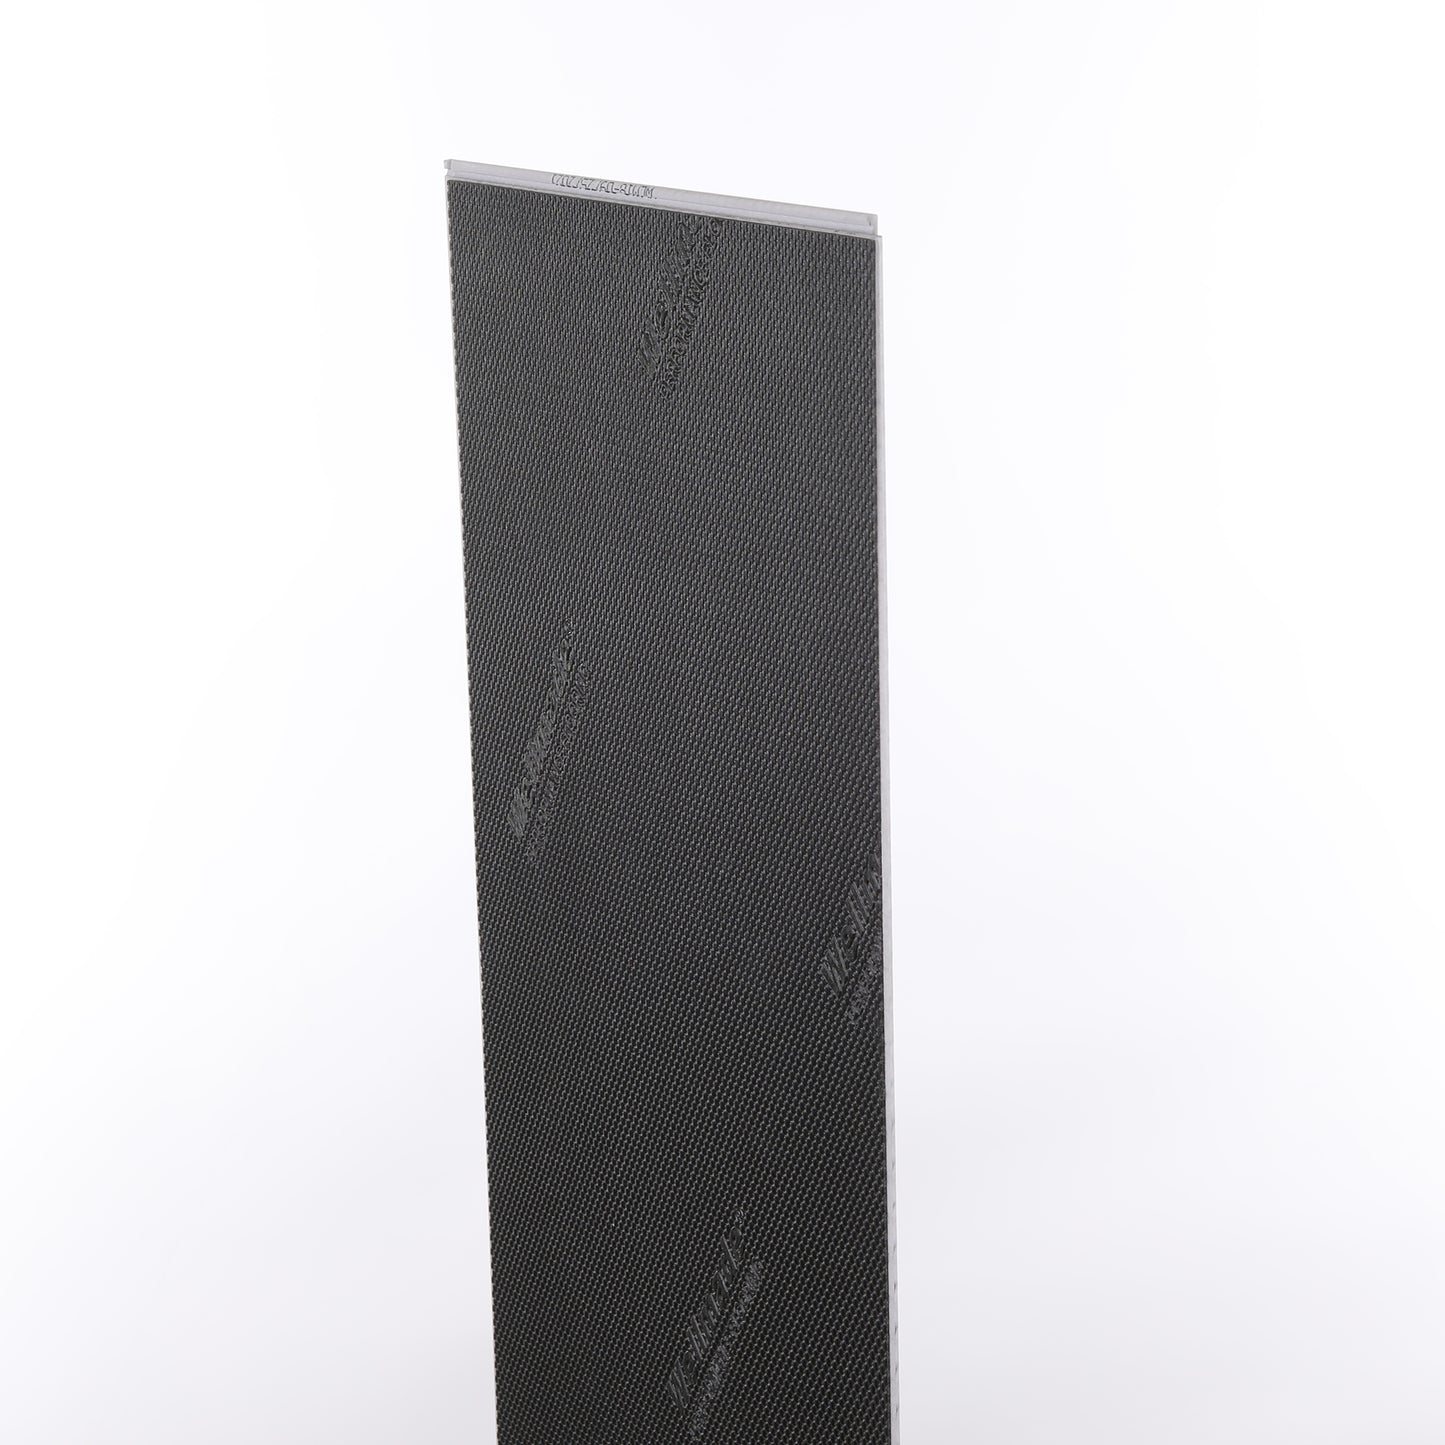 6mm Grace Bay HDPC® Waterproof Luxury Vinyl Tile Flooring 9.13 in. Wide x 60 in. Long